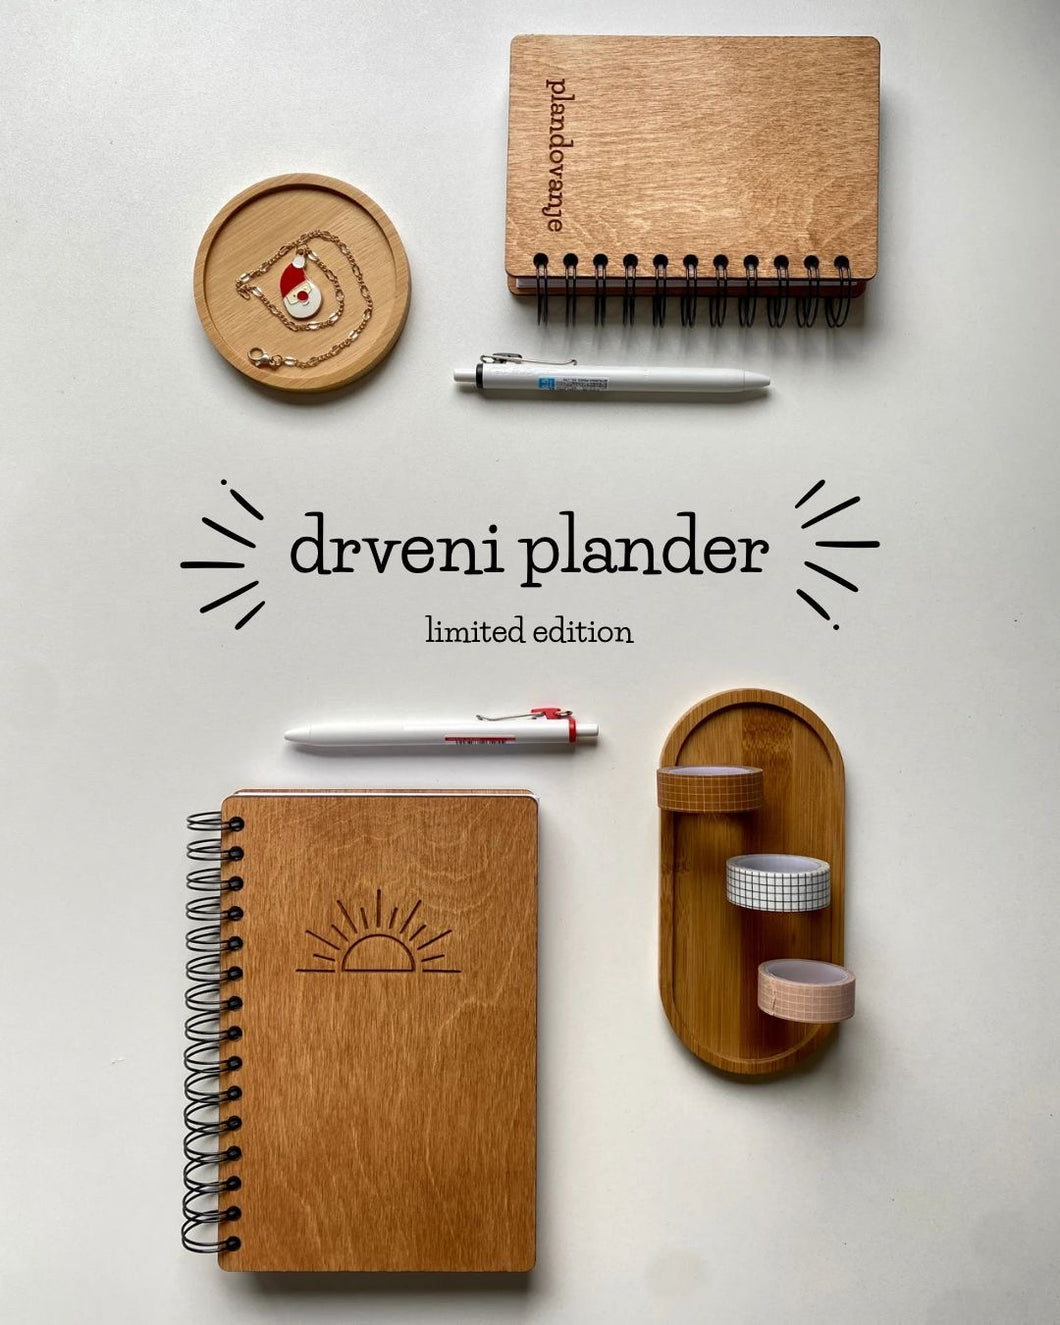 Drveni plander - limited edition